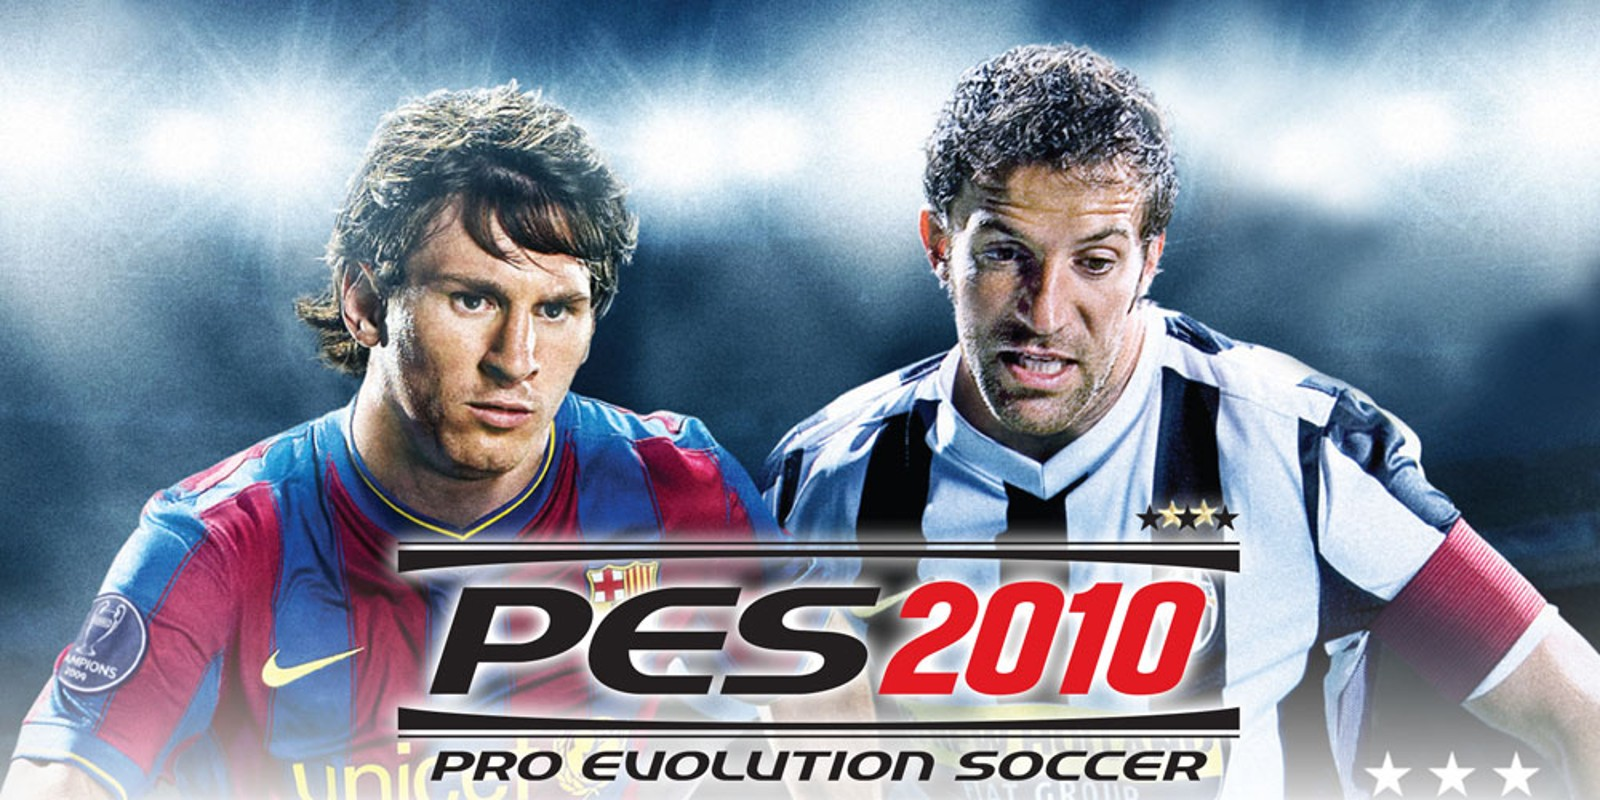 Игра футбол 2010. Pro Evolution Soccer 2010. Пес 2010. Пес 10. PES 2010 фото.